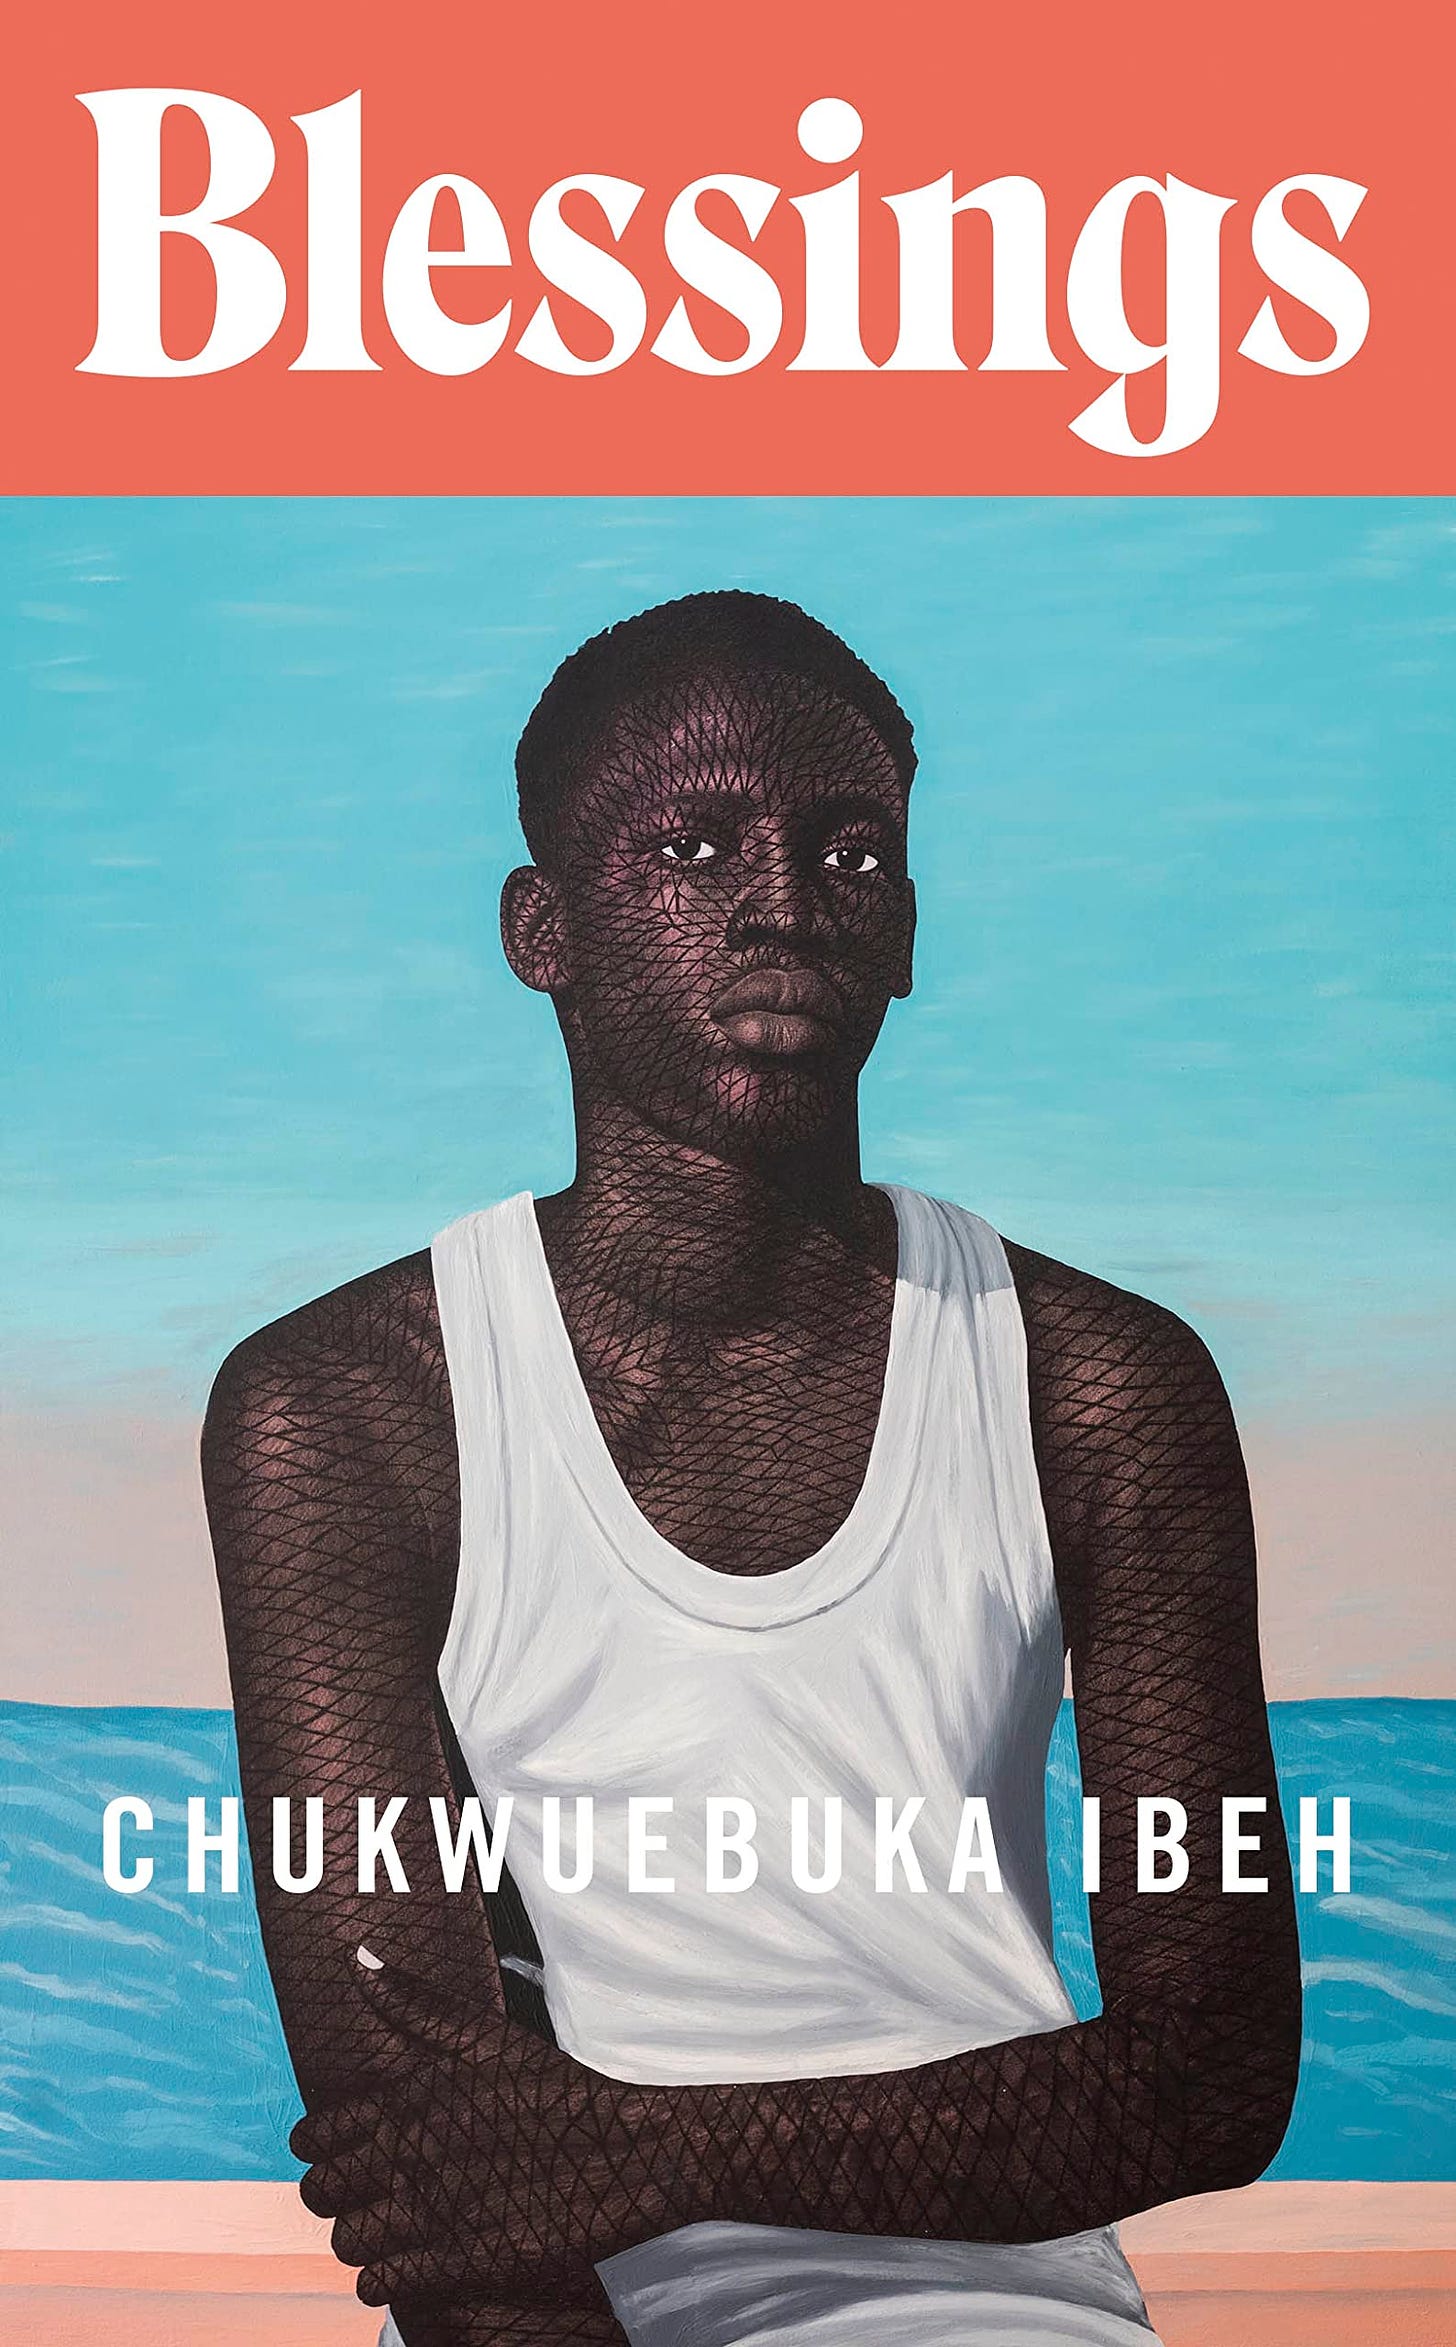 Blessings by Chukwuebuka Ibeh | Goodreads